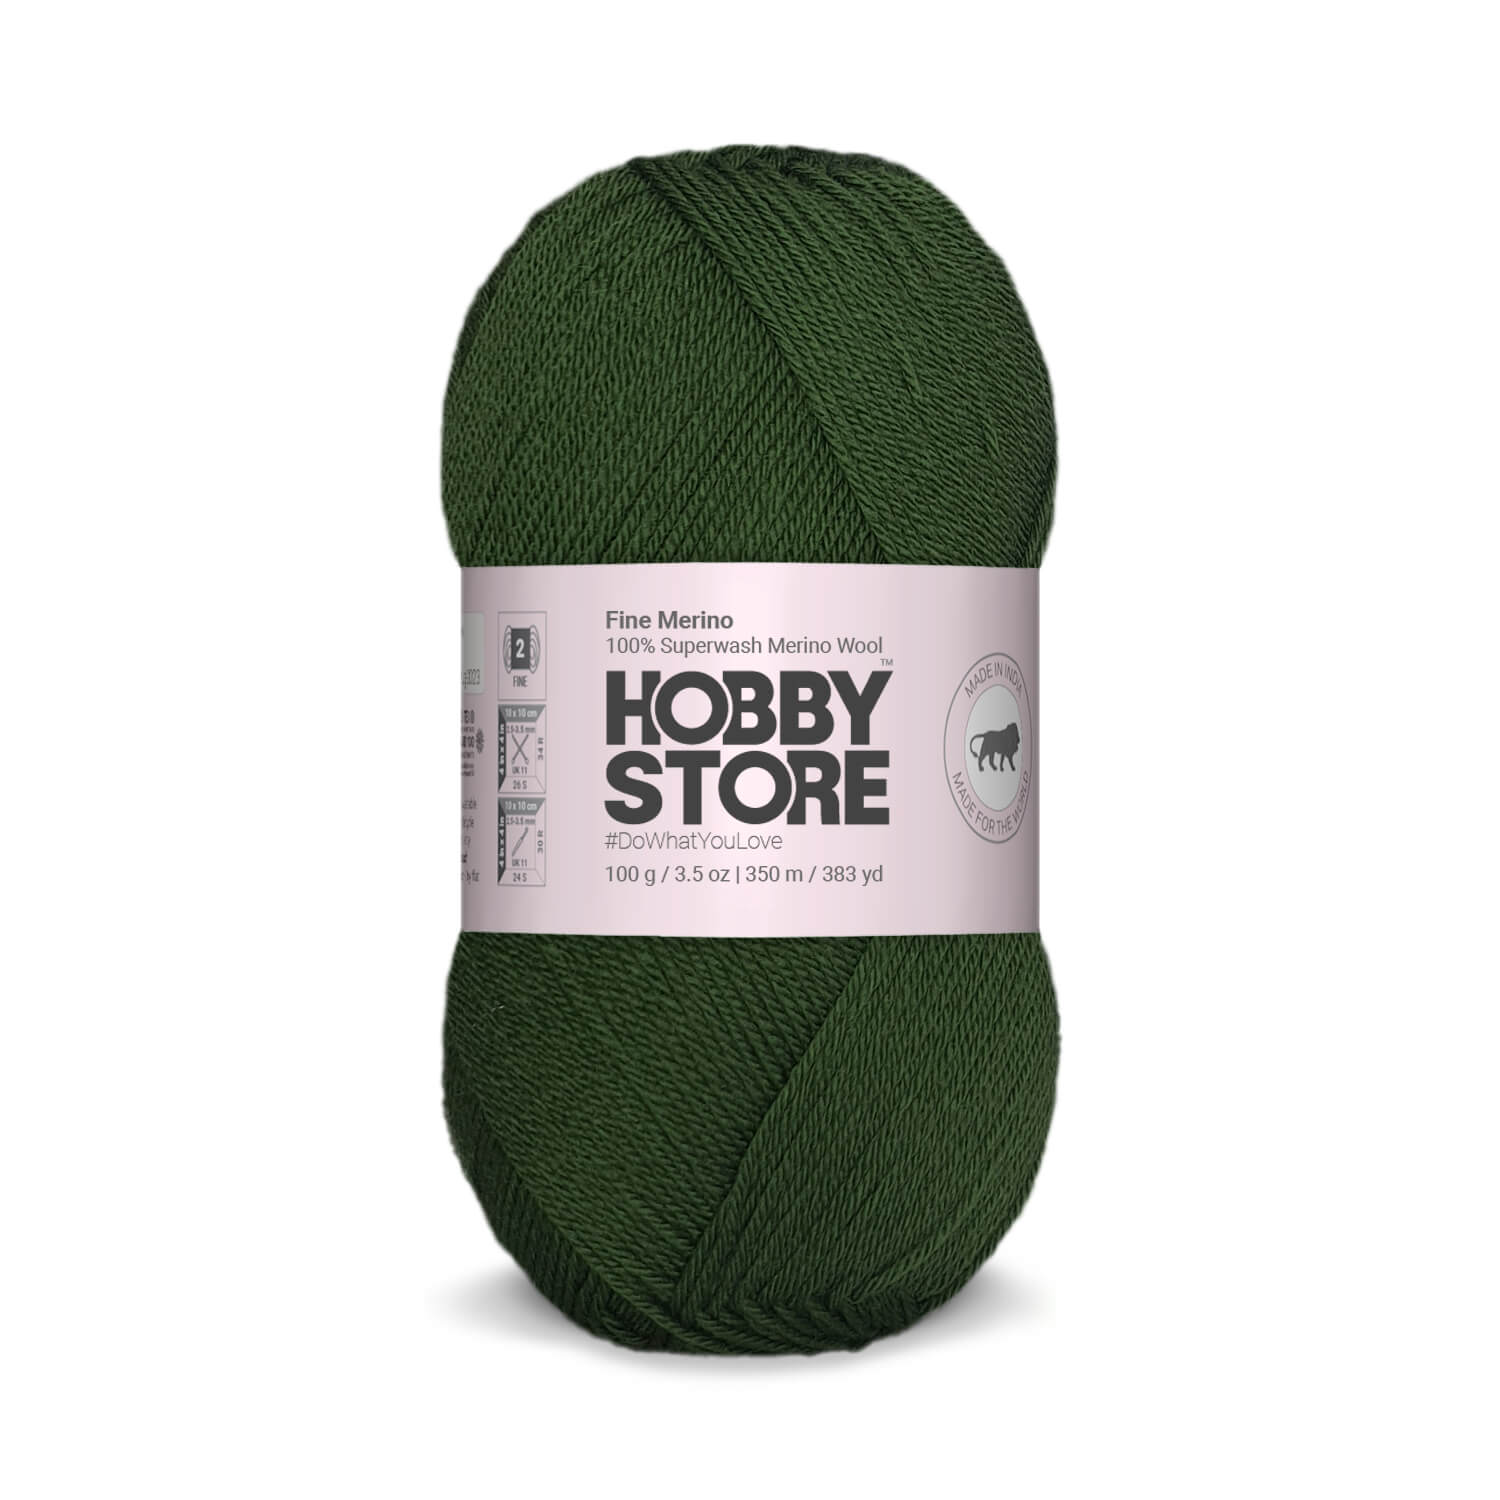 Fine Merino Wool by Hobby Store - Green FM017